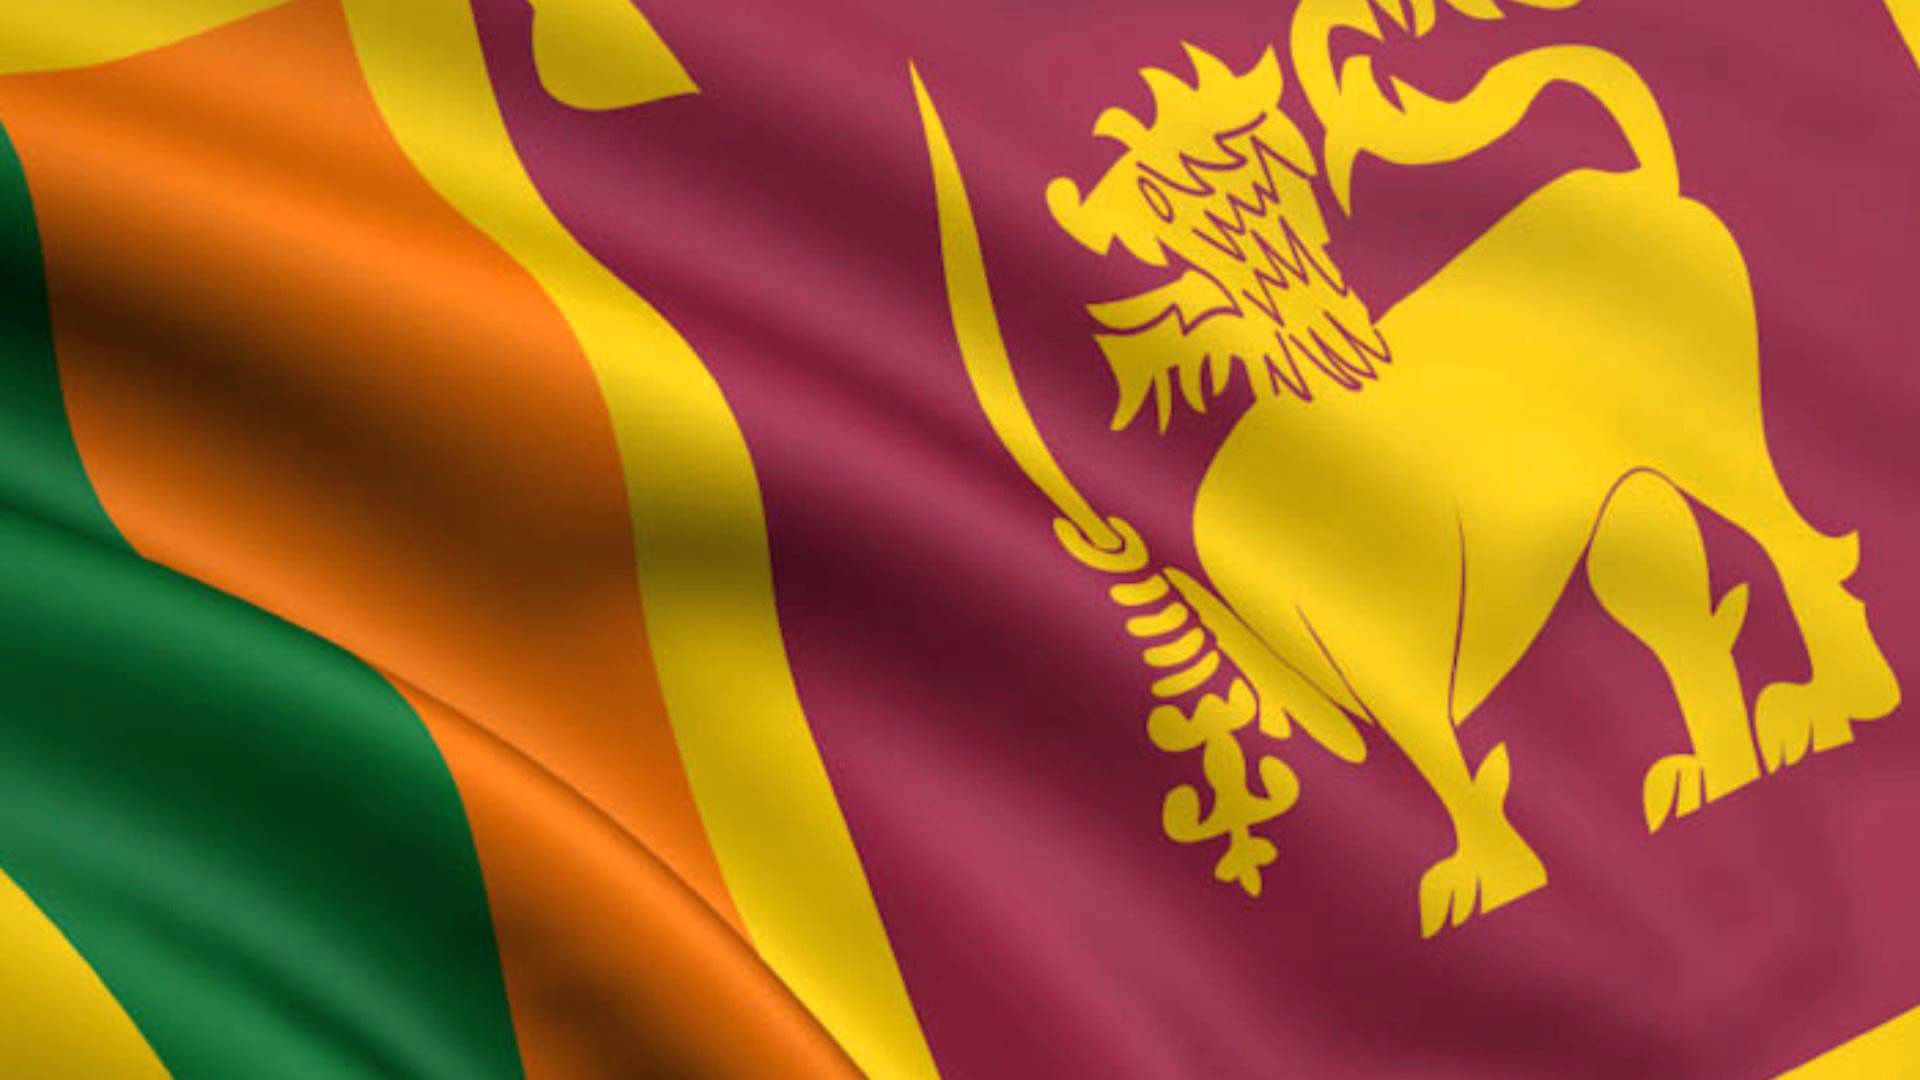 Sri Lanka Flag Wallpaper | Download Free Desktop Wallpaper Images ...